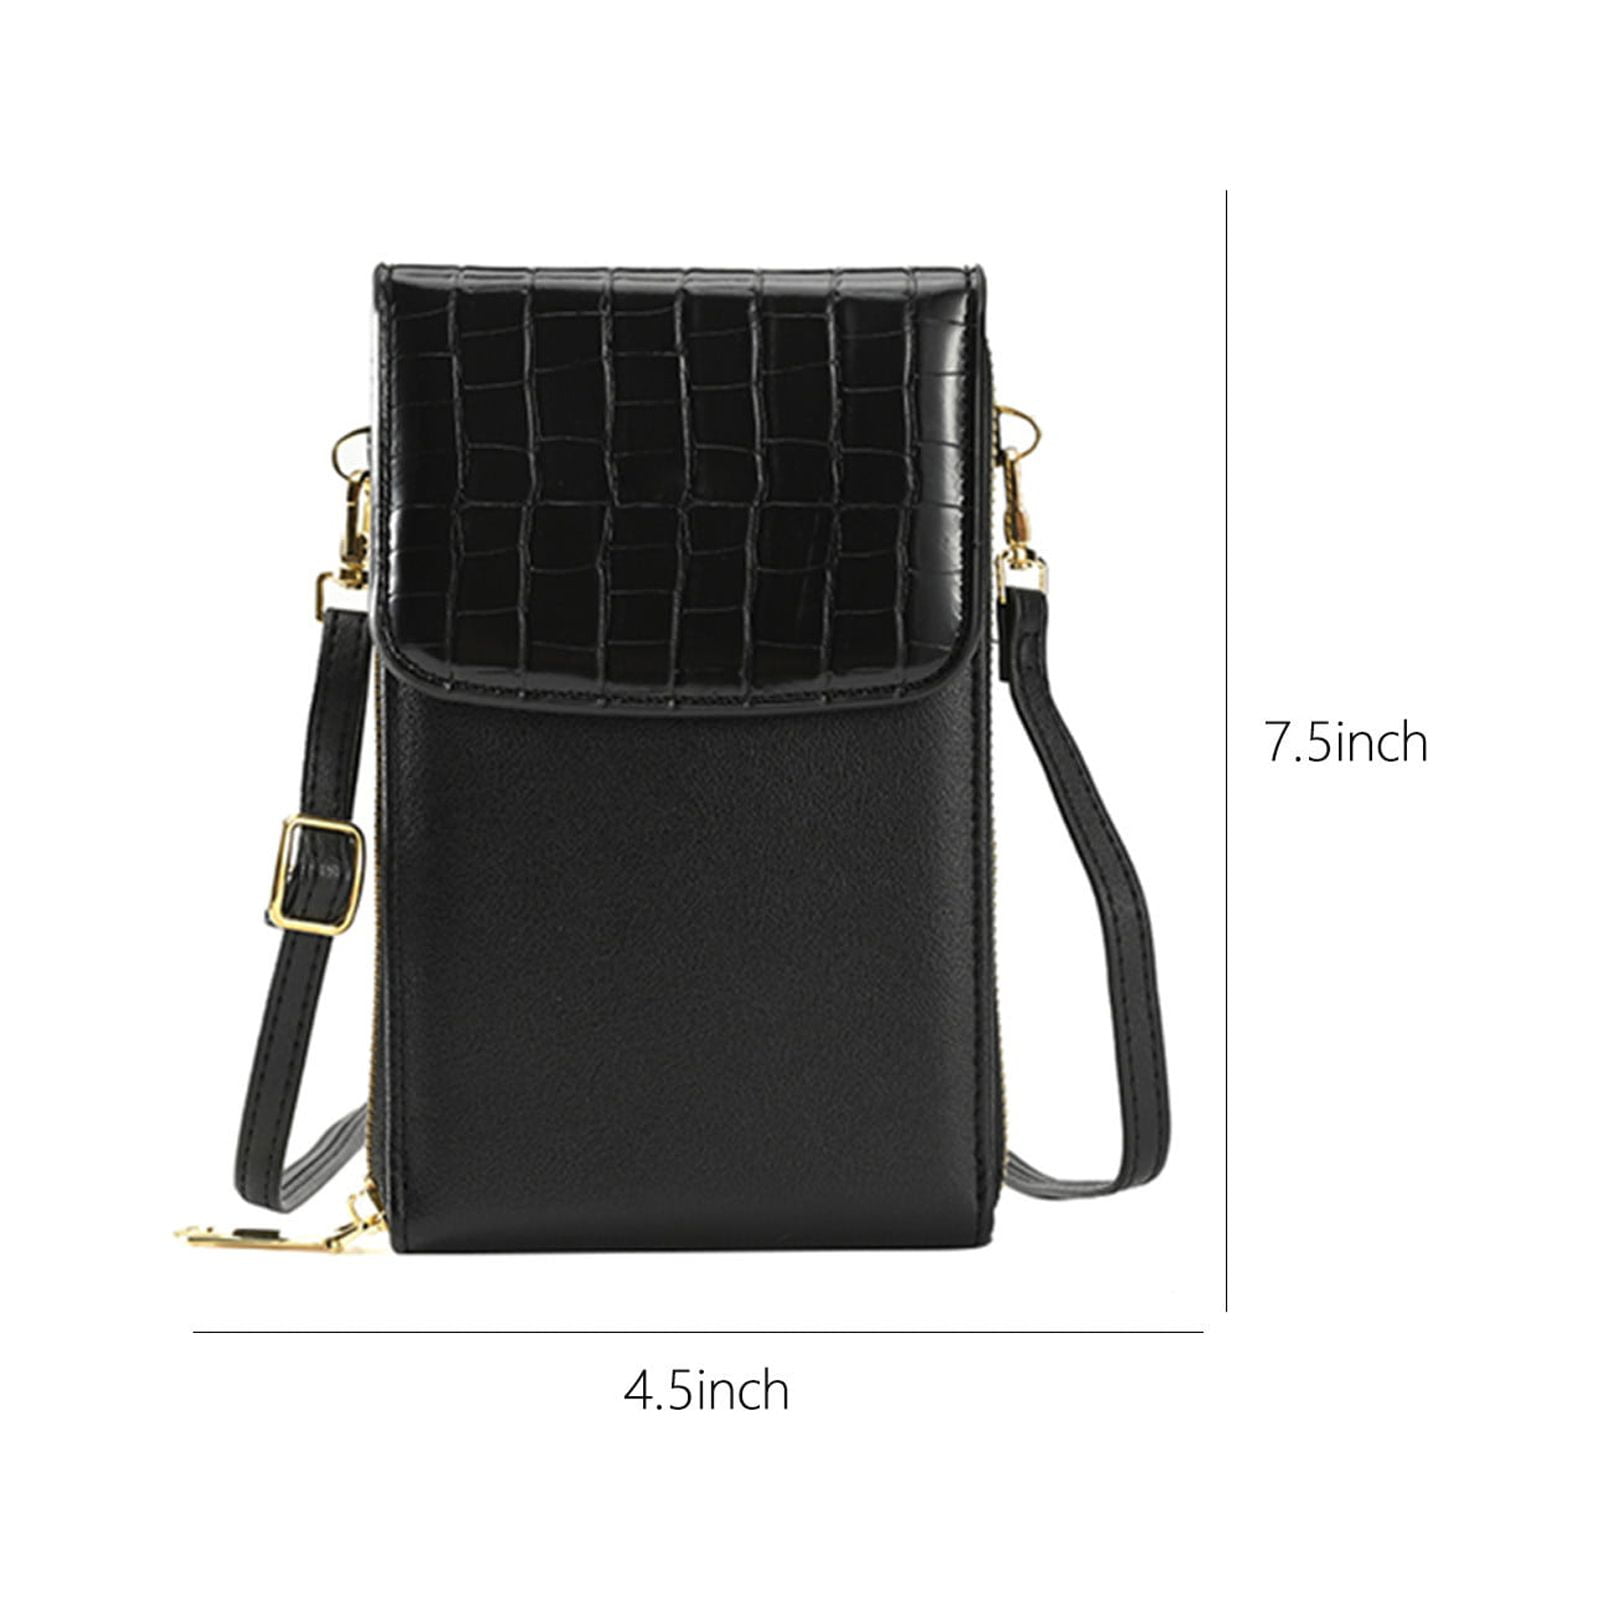 Buy Black Leather Tote Bag for Women Purse Large Work Shoulder Bag SALE  Handbag Laptop Bag Women Gift for Her Bridesmaid Mother Wife Birthday  Online in India - Etsy